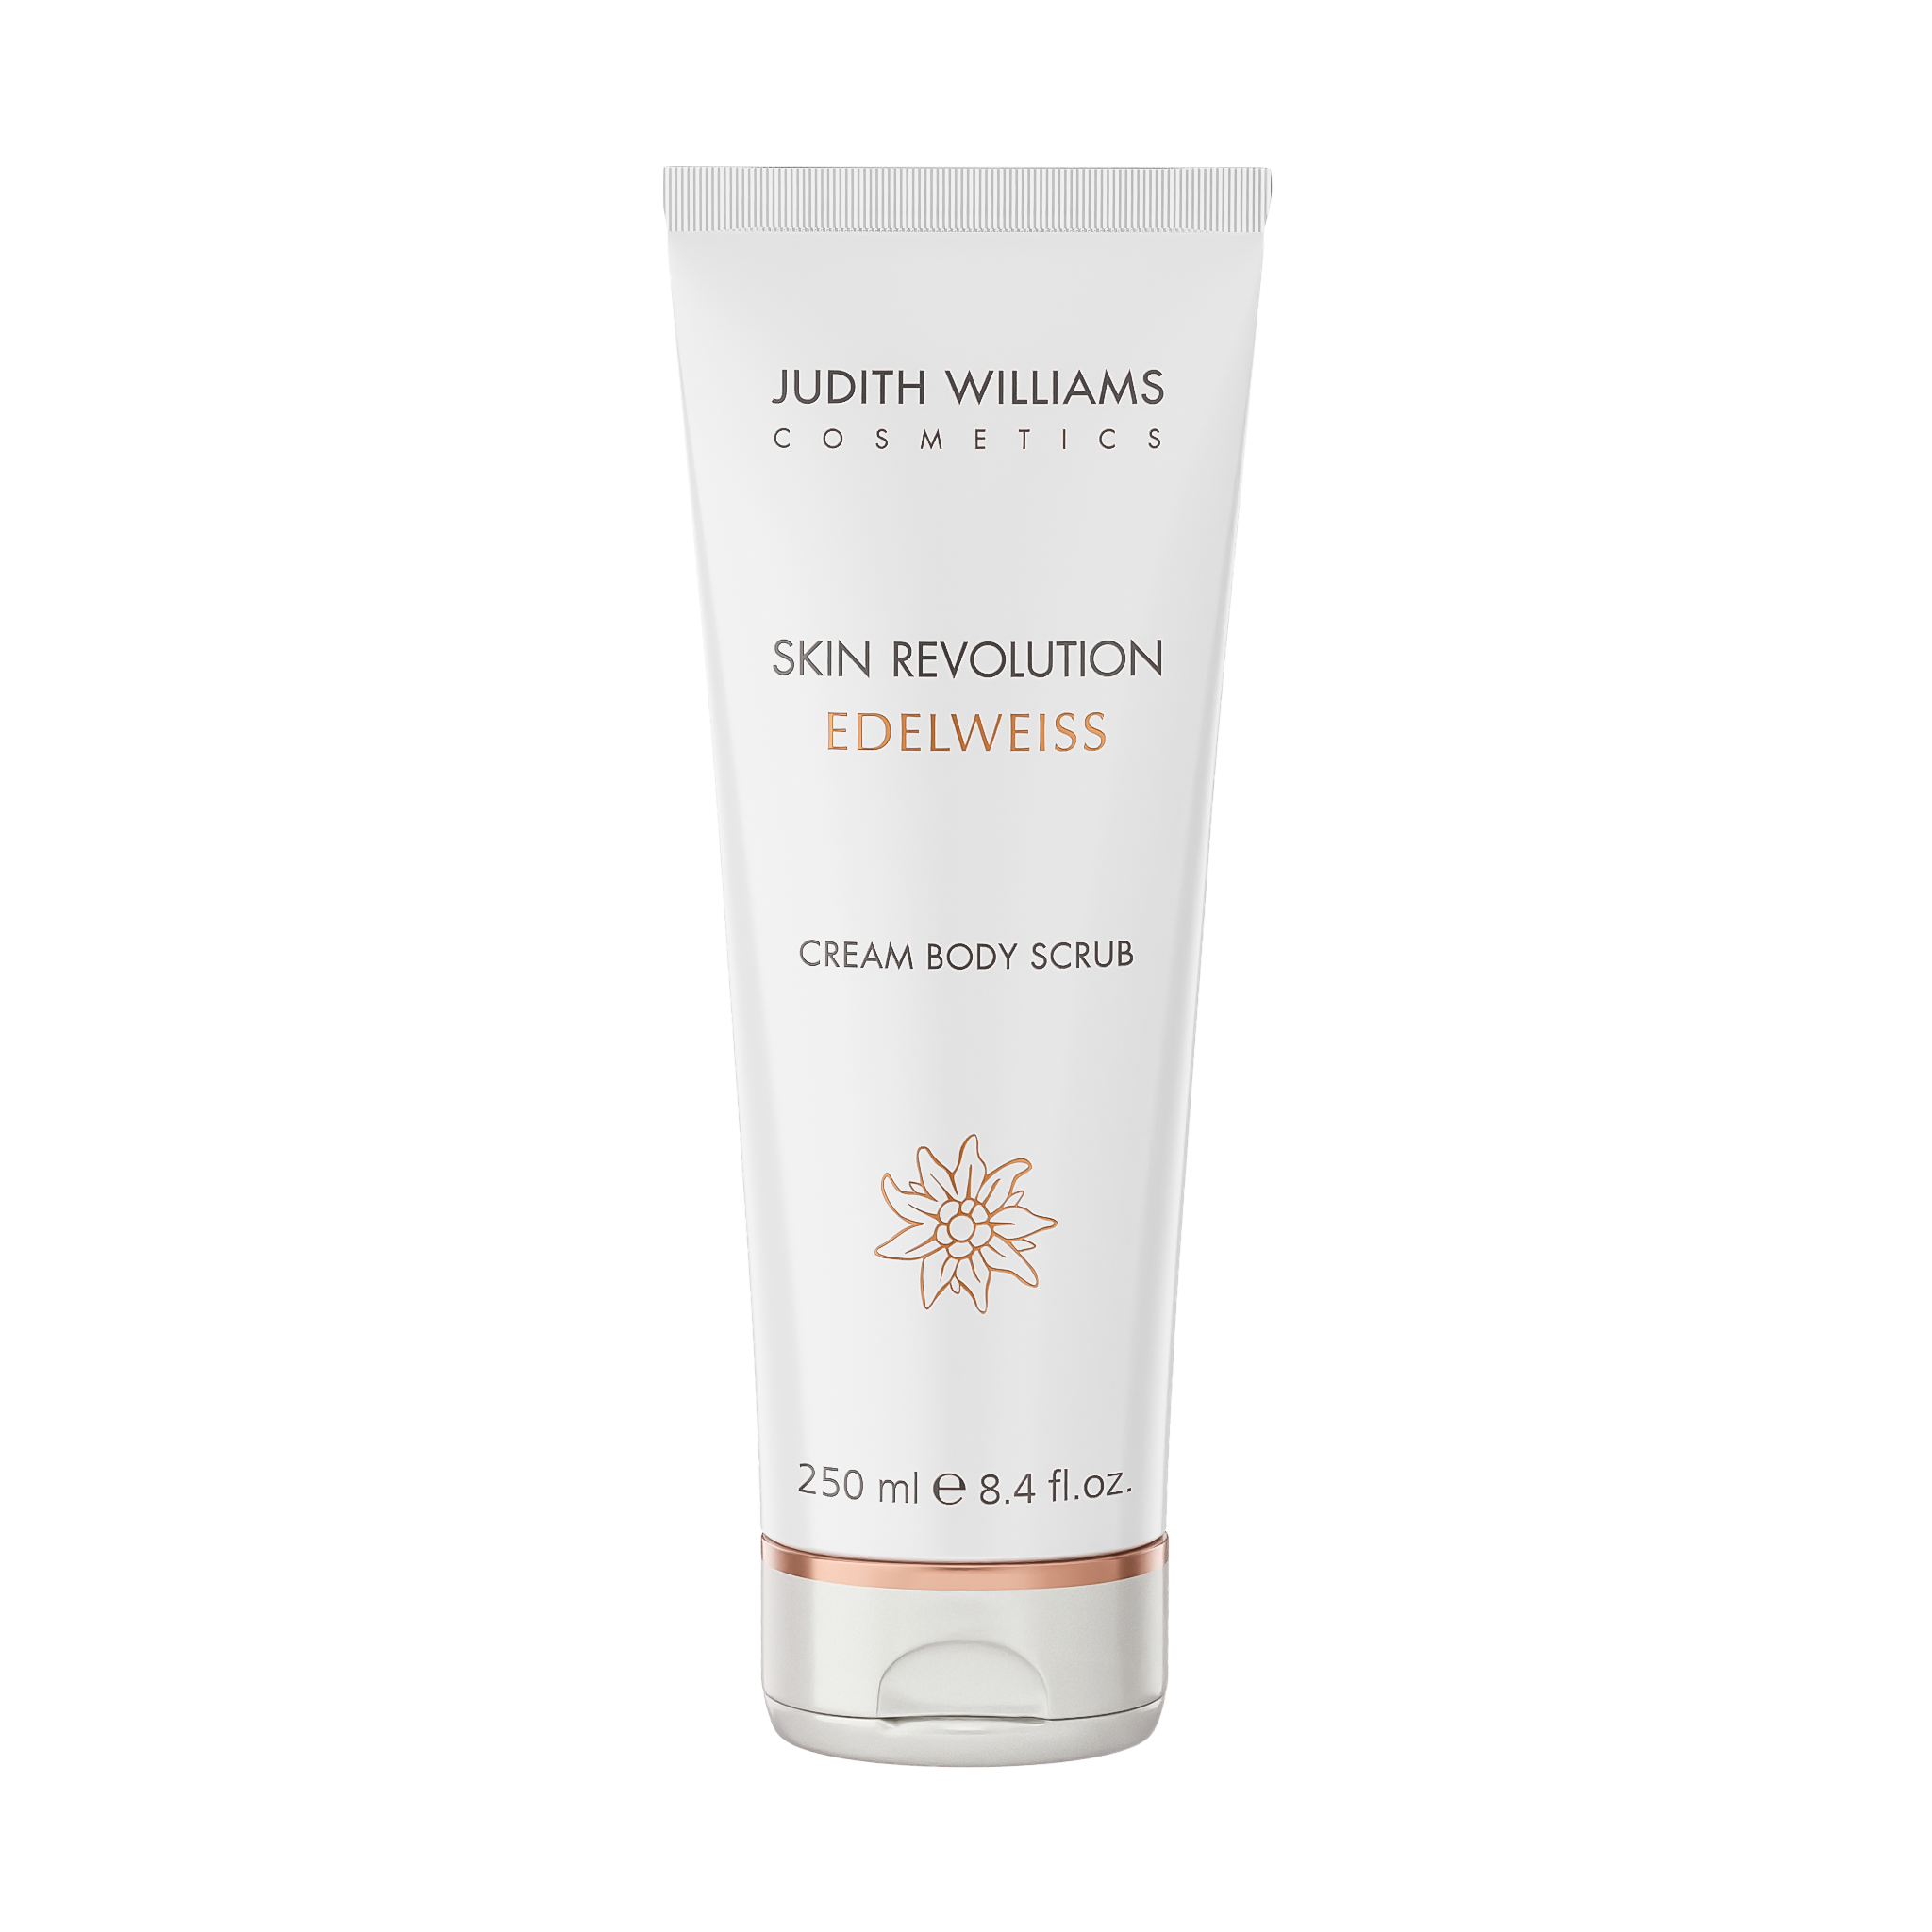 Körperpeeling | Skin Revolution Edelweiss | Cream Body Scrub | Judith Williams